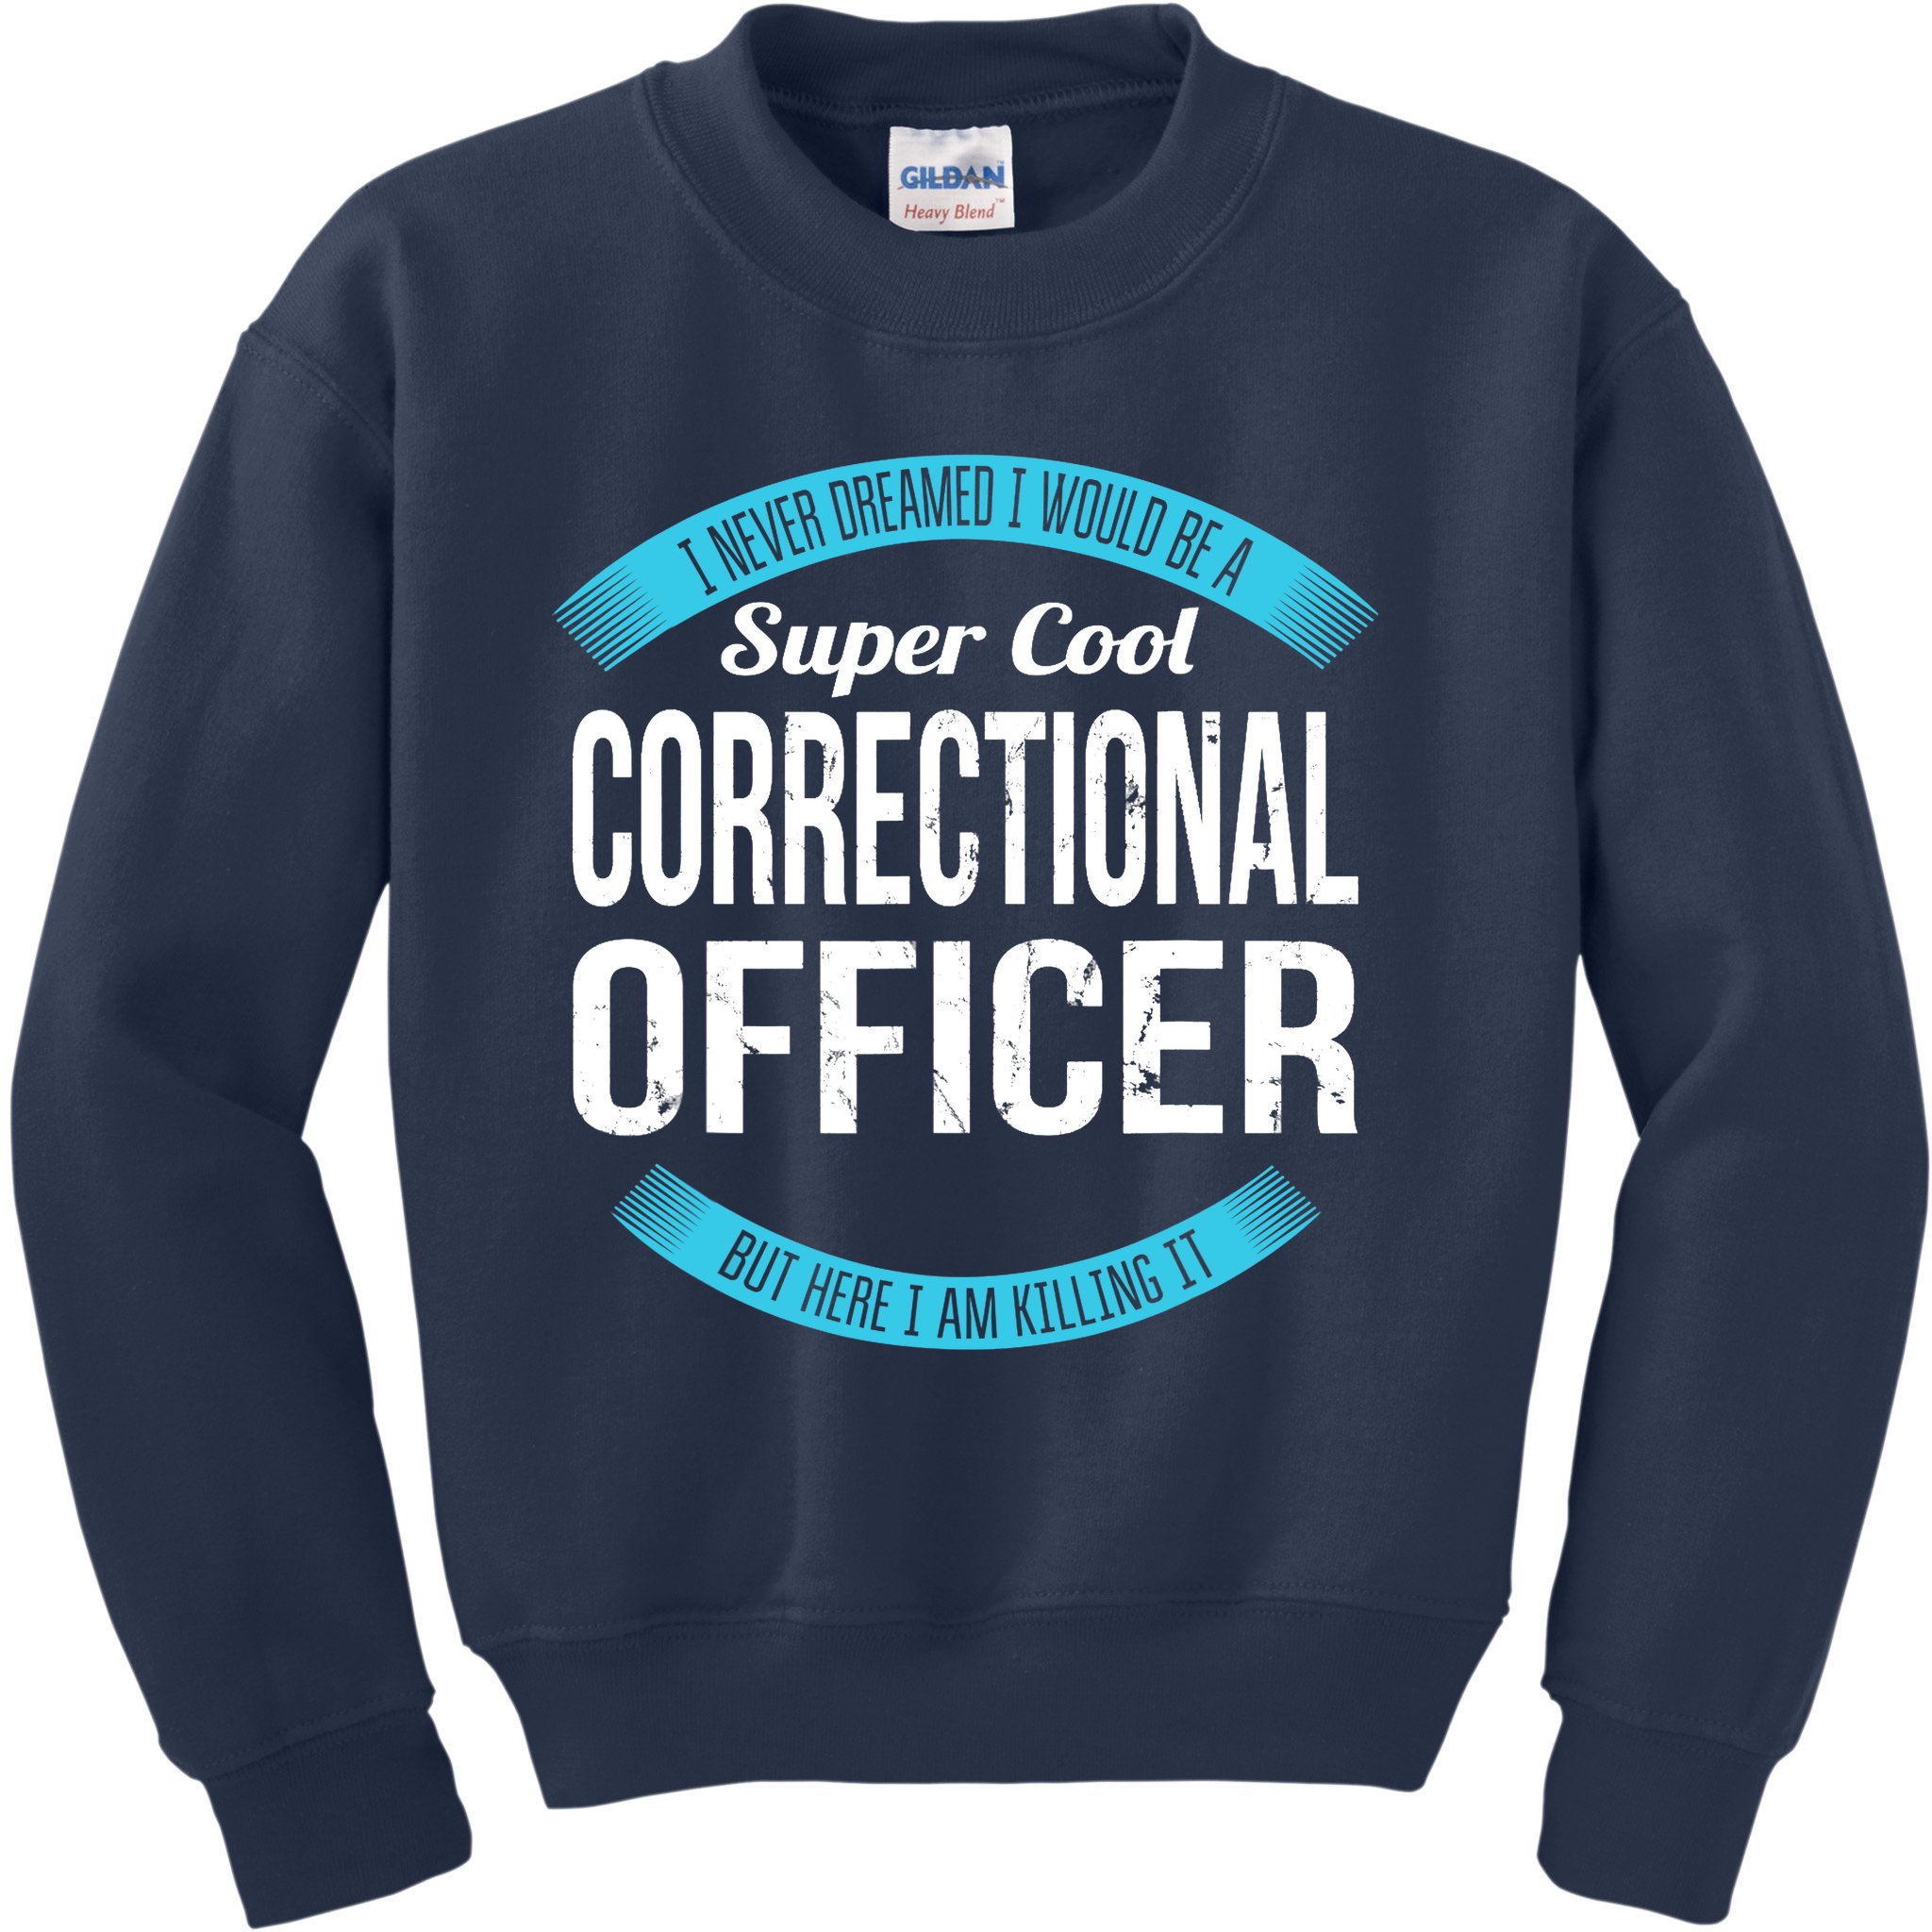 Casitika Correctional Officer Gifts. 11 oz Corrections Work Coffee Mug